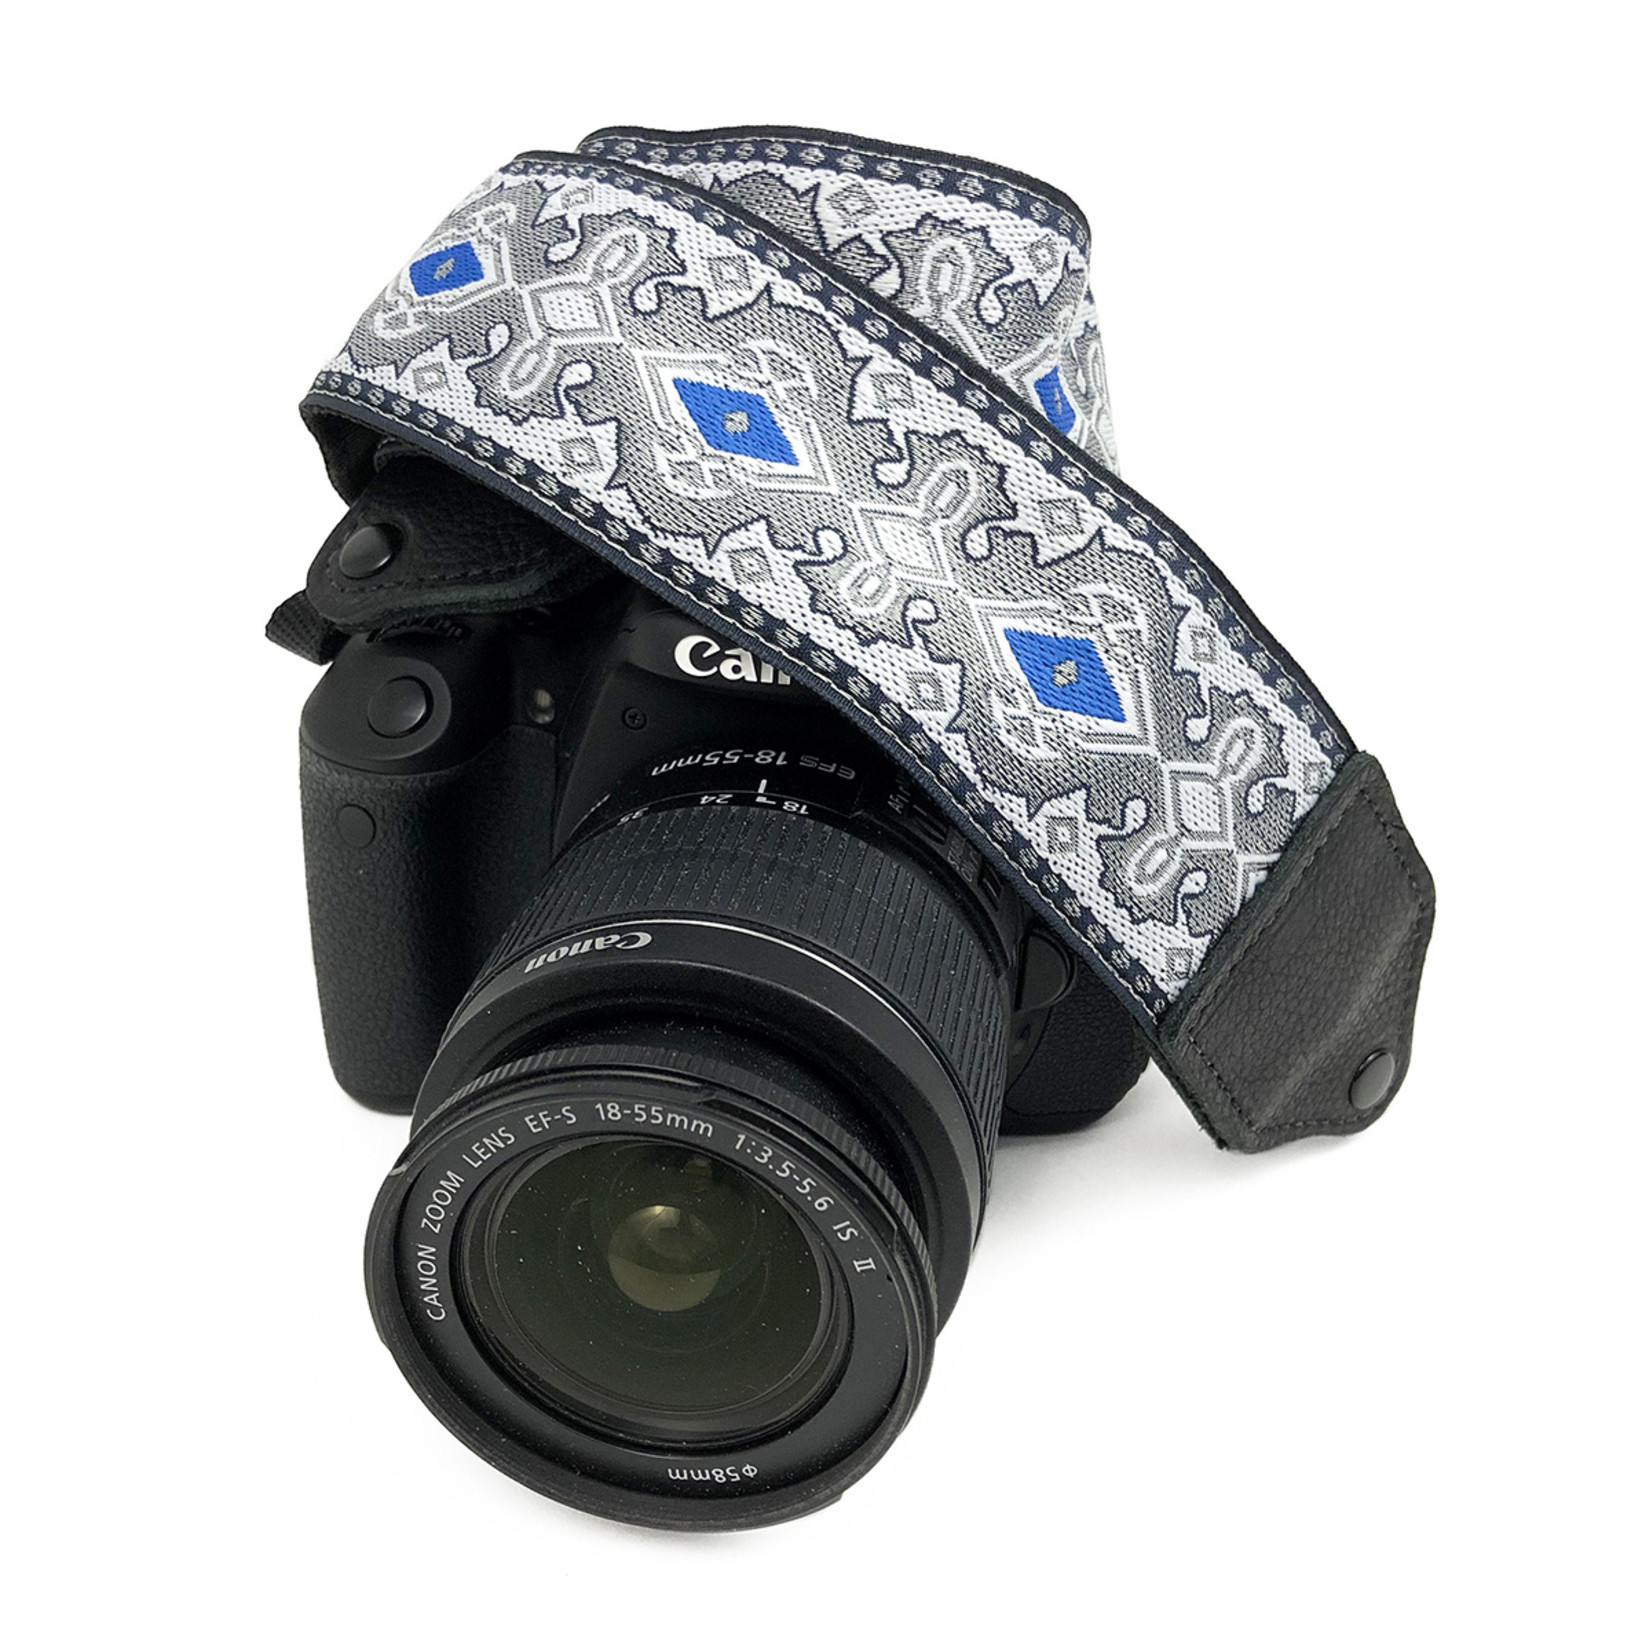 Perris Leathers Silver / Blue Diamond Jacquard Camera Strap